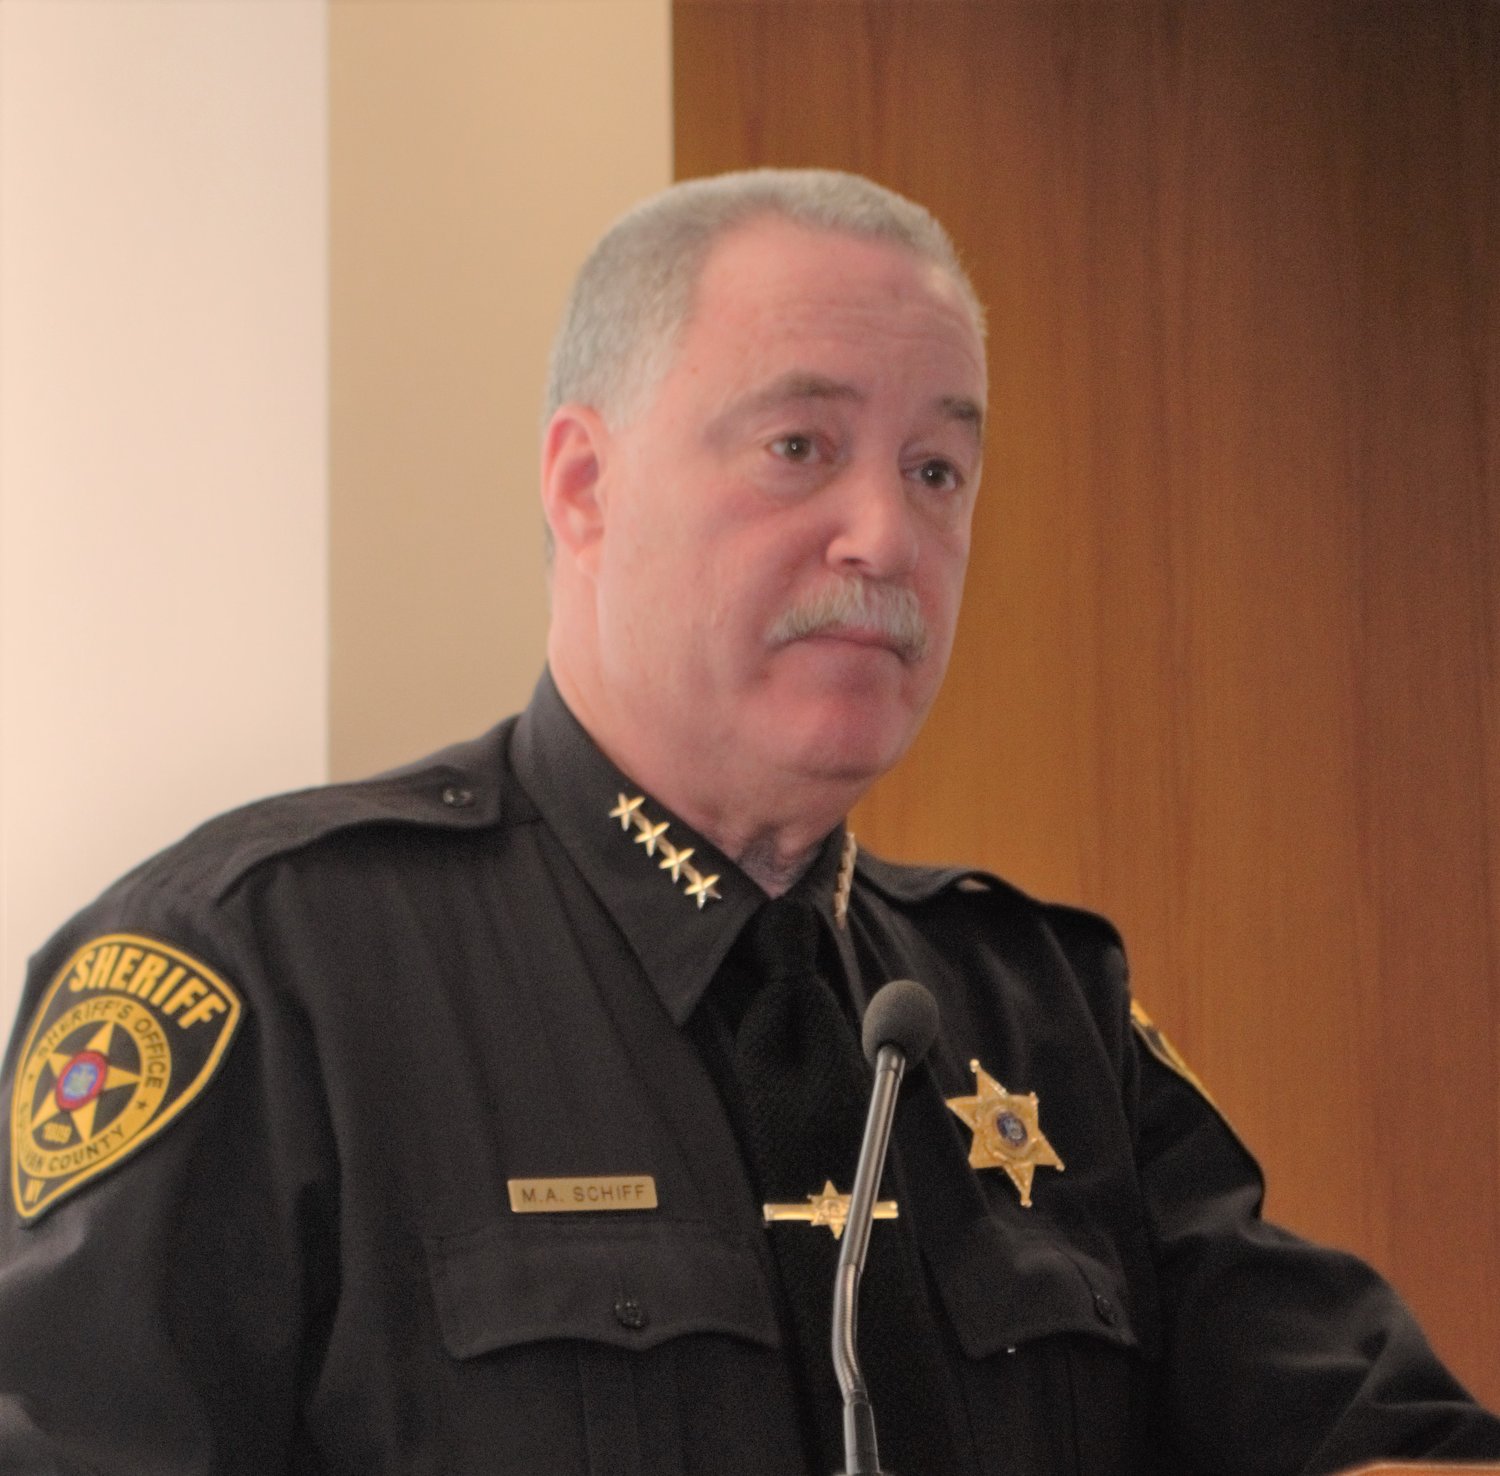 Sheriff Mike Schiff